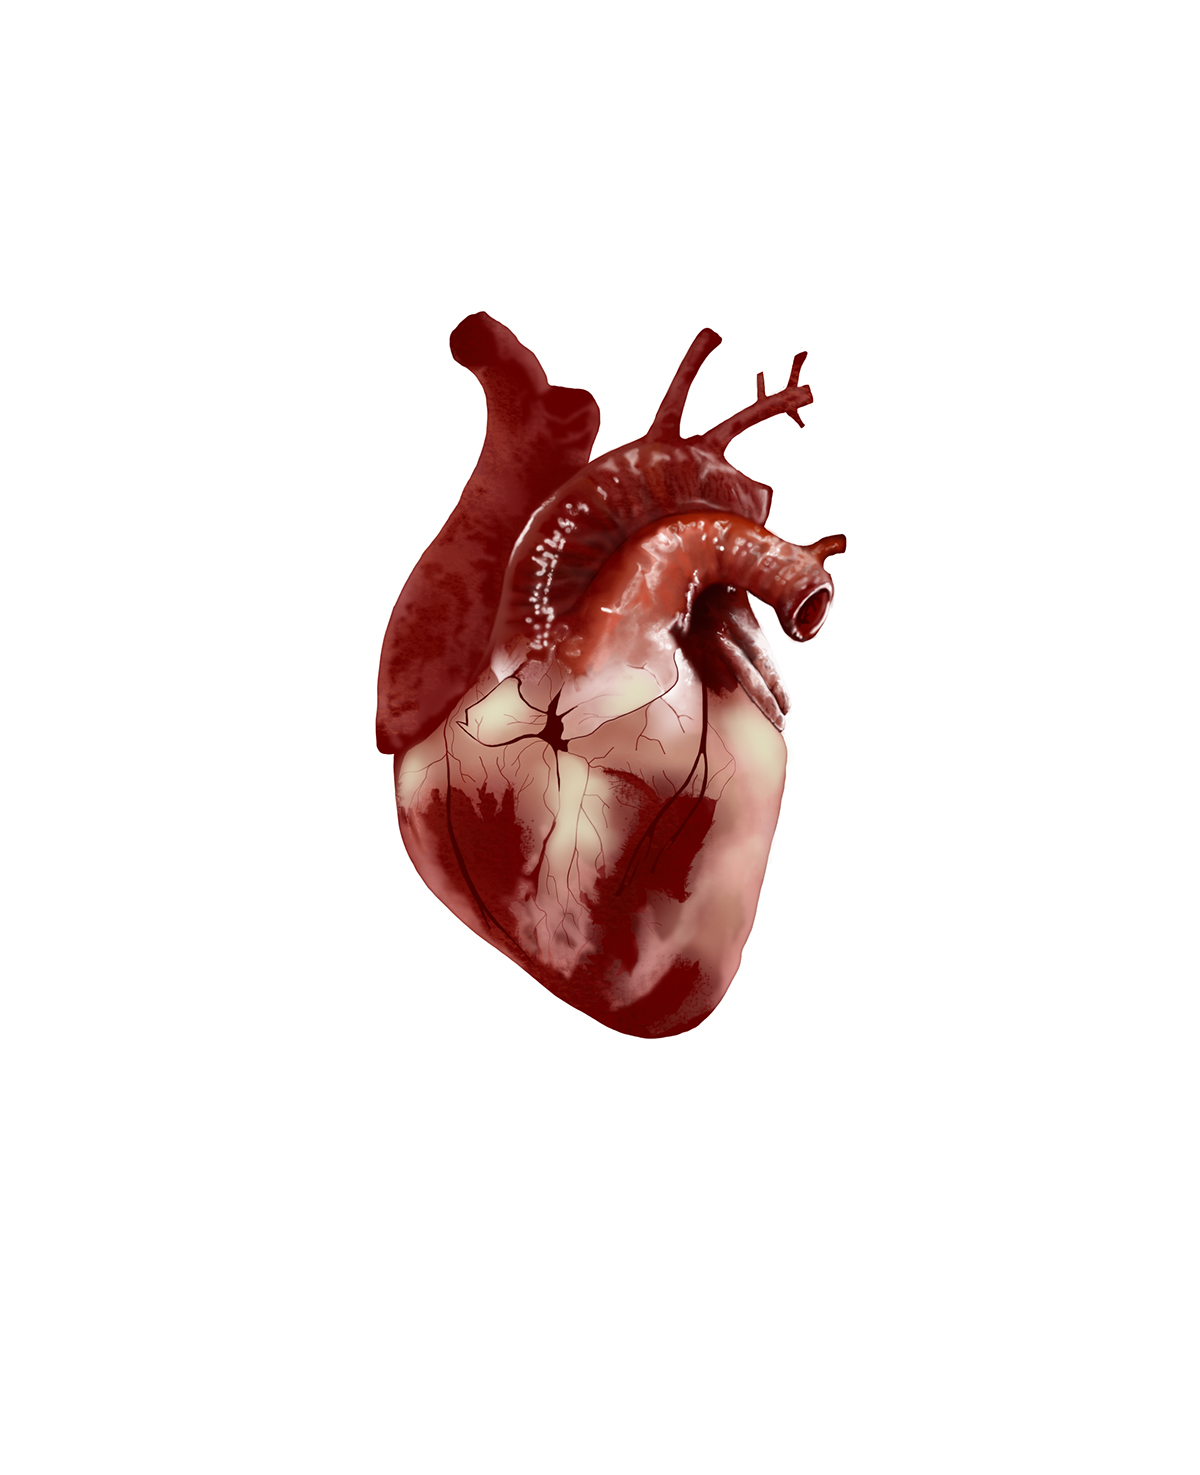 heart cuore organ speed heart speedheart illustration heart illustrazione cuore organo digital illustration speed drawing Real Love tattoo red blood